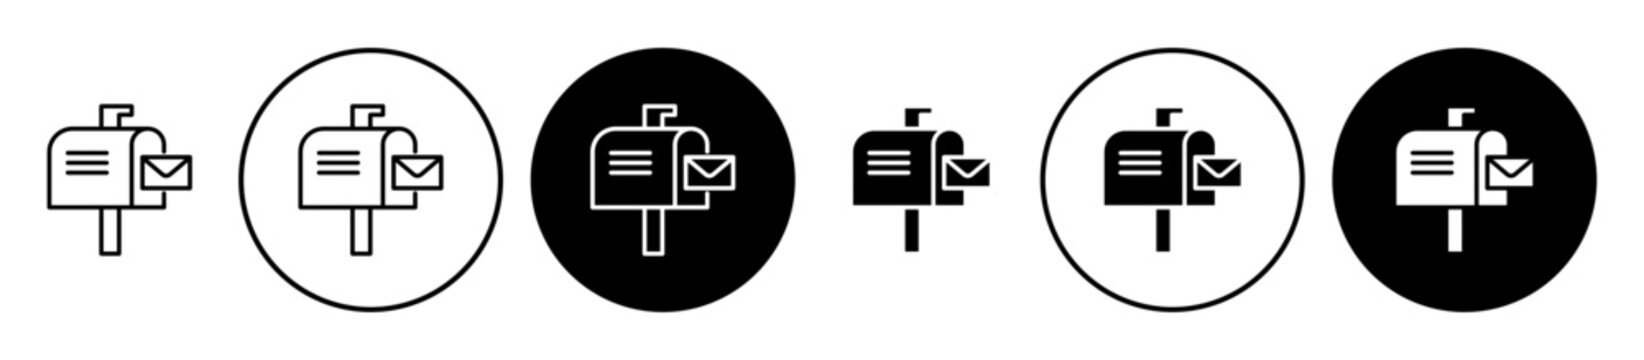 letter box vector icon set. pobox symbol in black color. postal postcard postbox sign. mail box vector symbol.